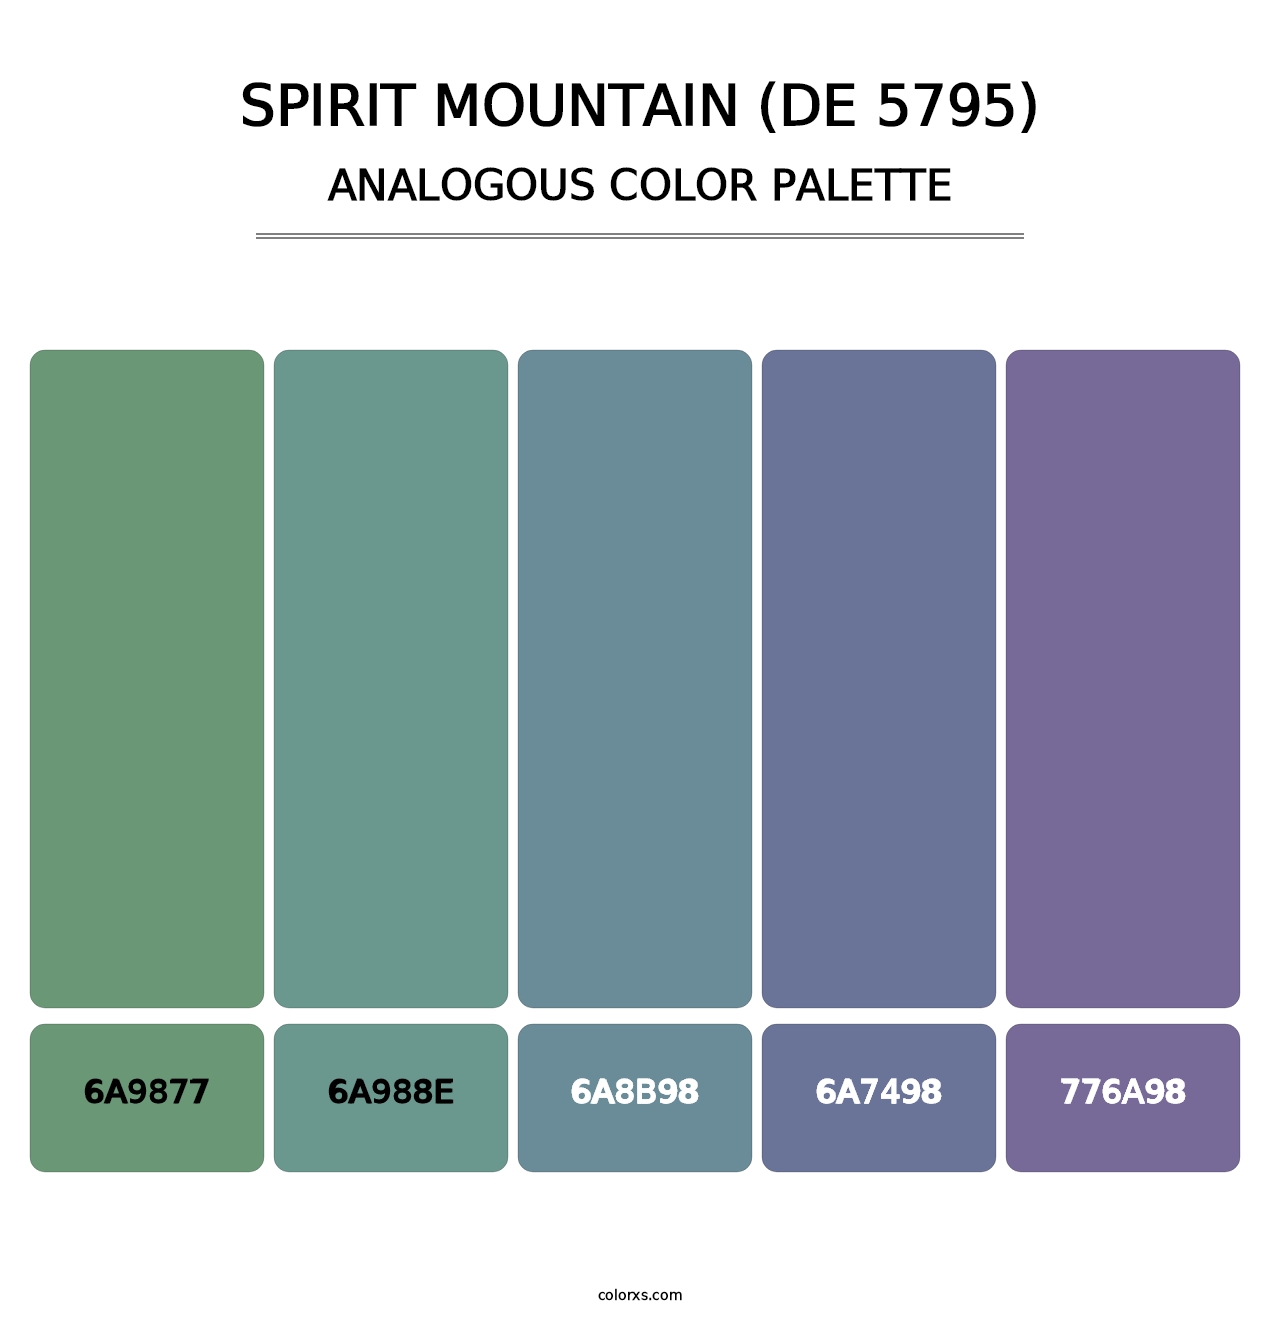 Spirit Mountain (DE 5795) - Analogous Color Palette